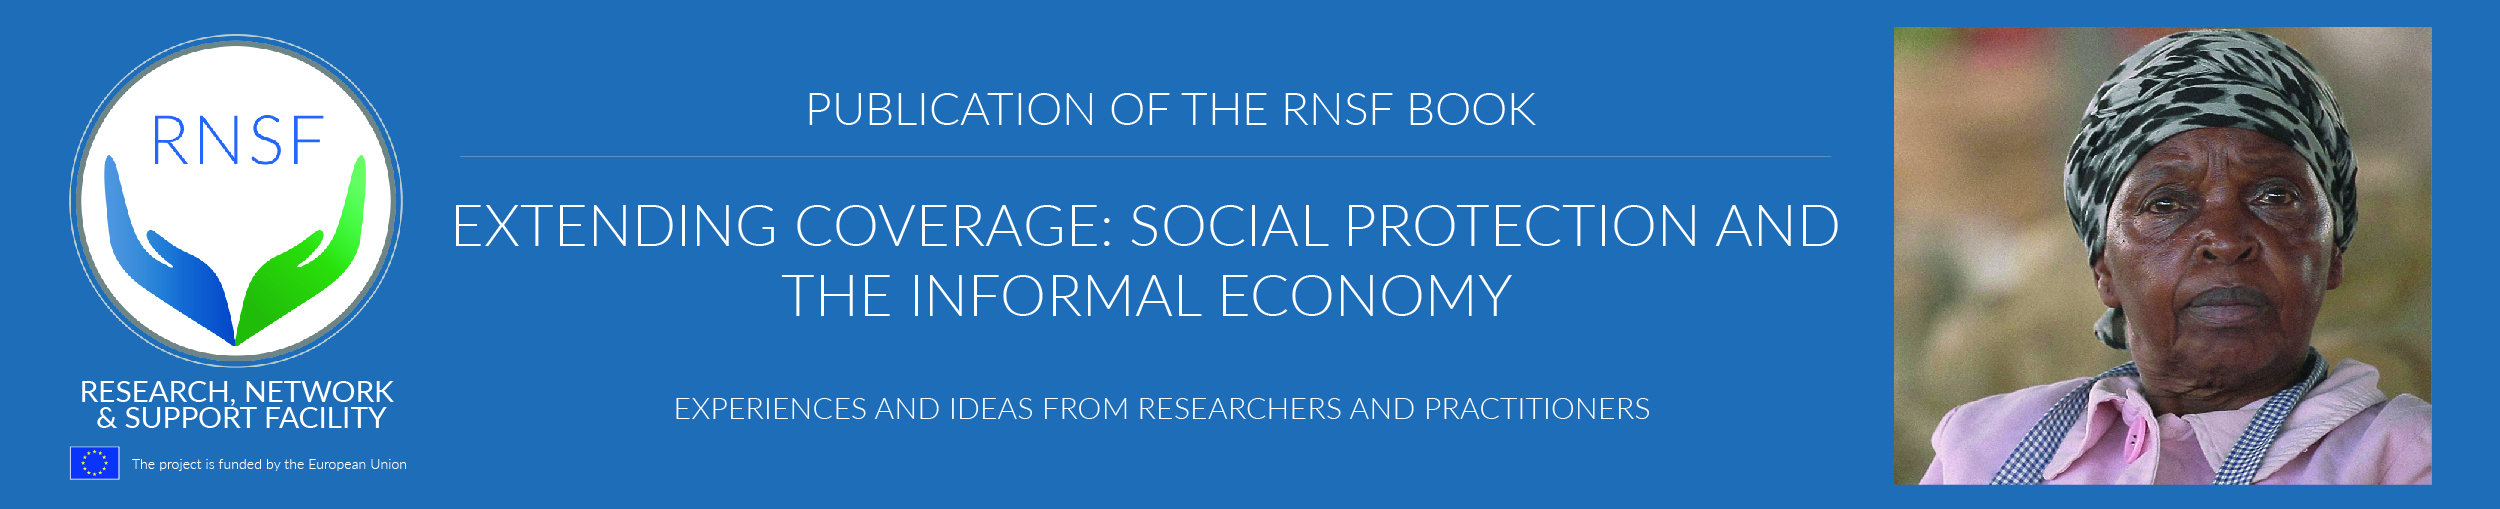 RNSF Book social protection informal economy